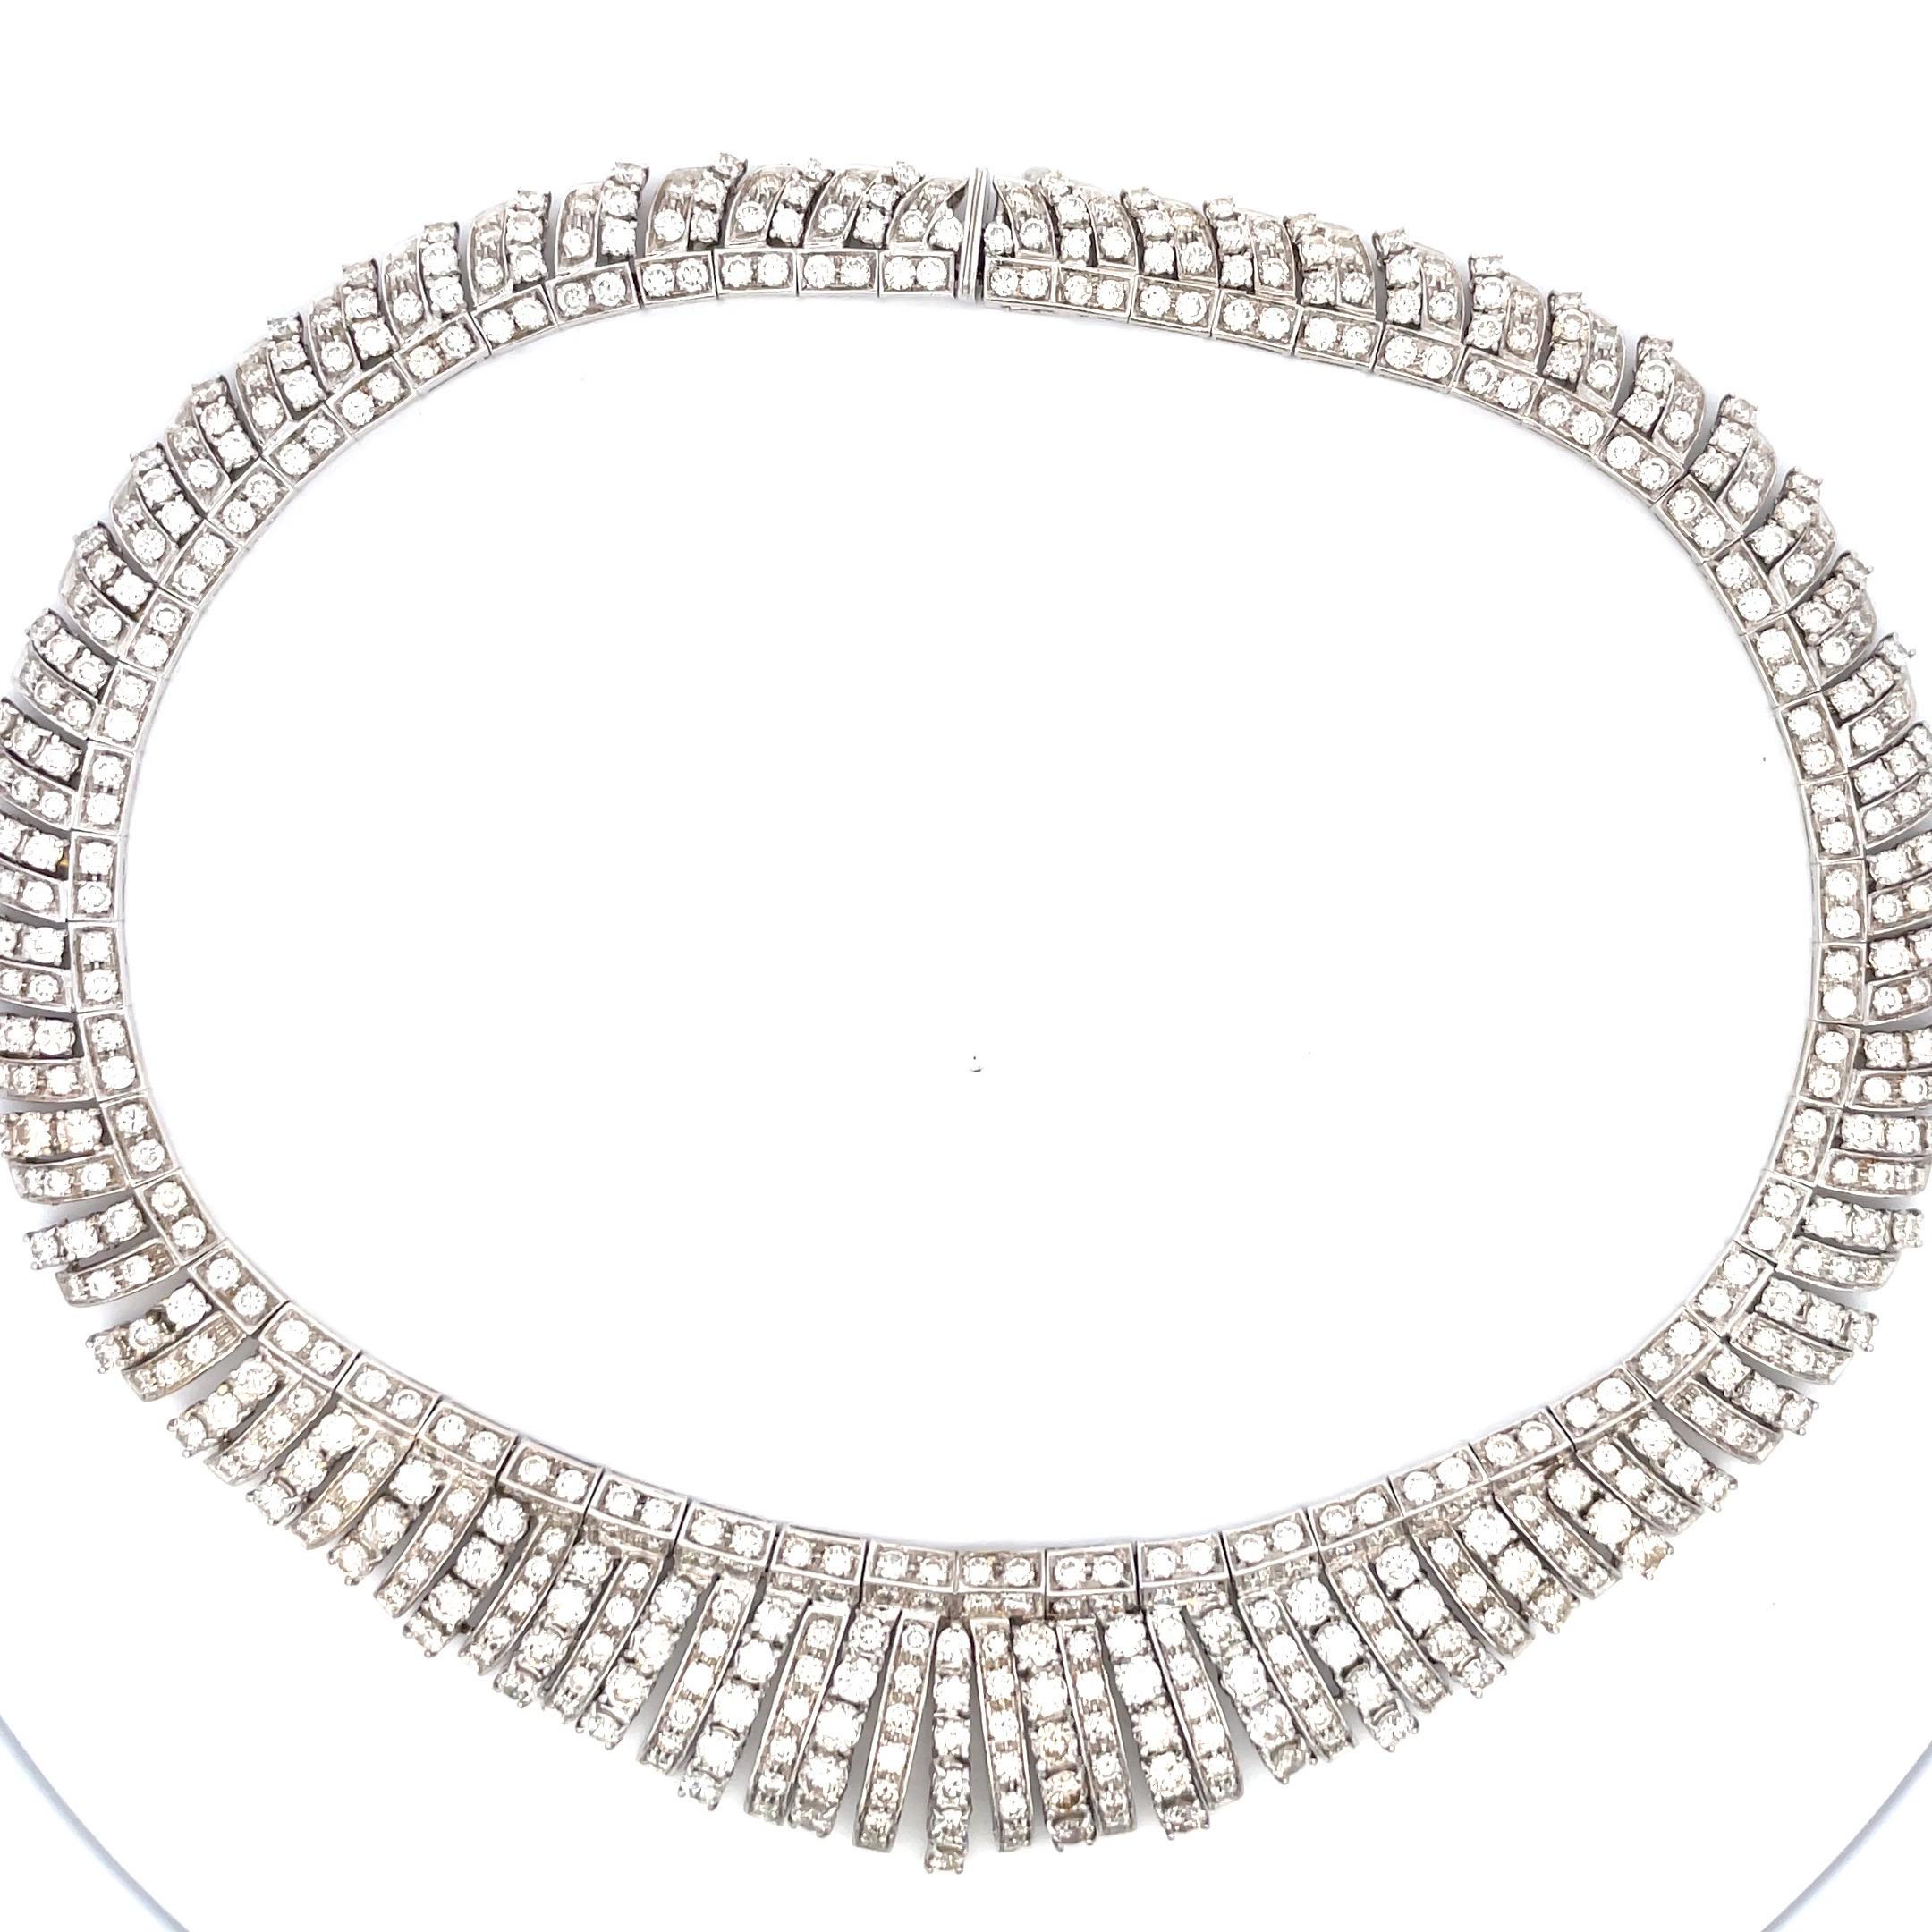 Contemporary Vintage Diamond Collar Bib Necklace 66 Carats 18 Karat White Gold 113.5 Grams For Sale